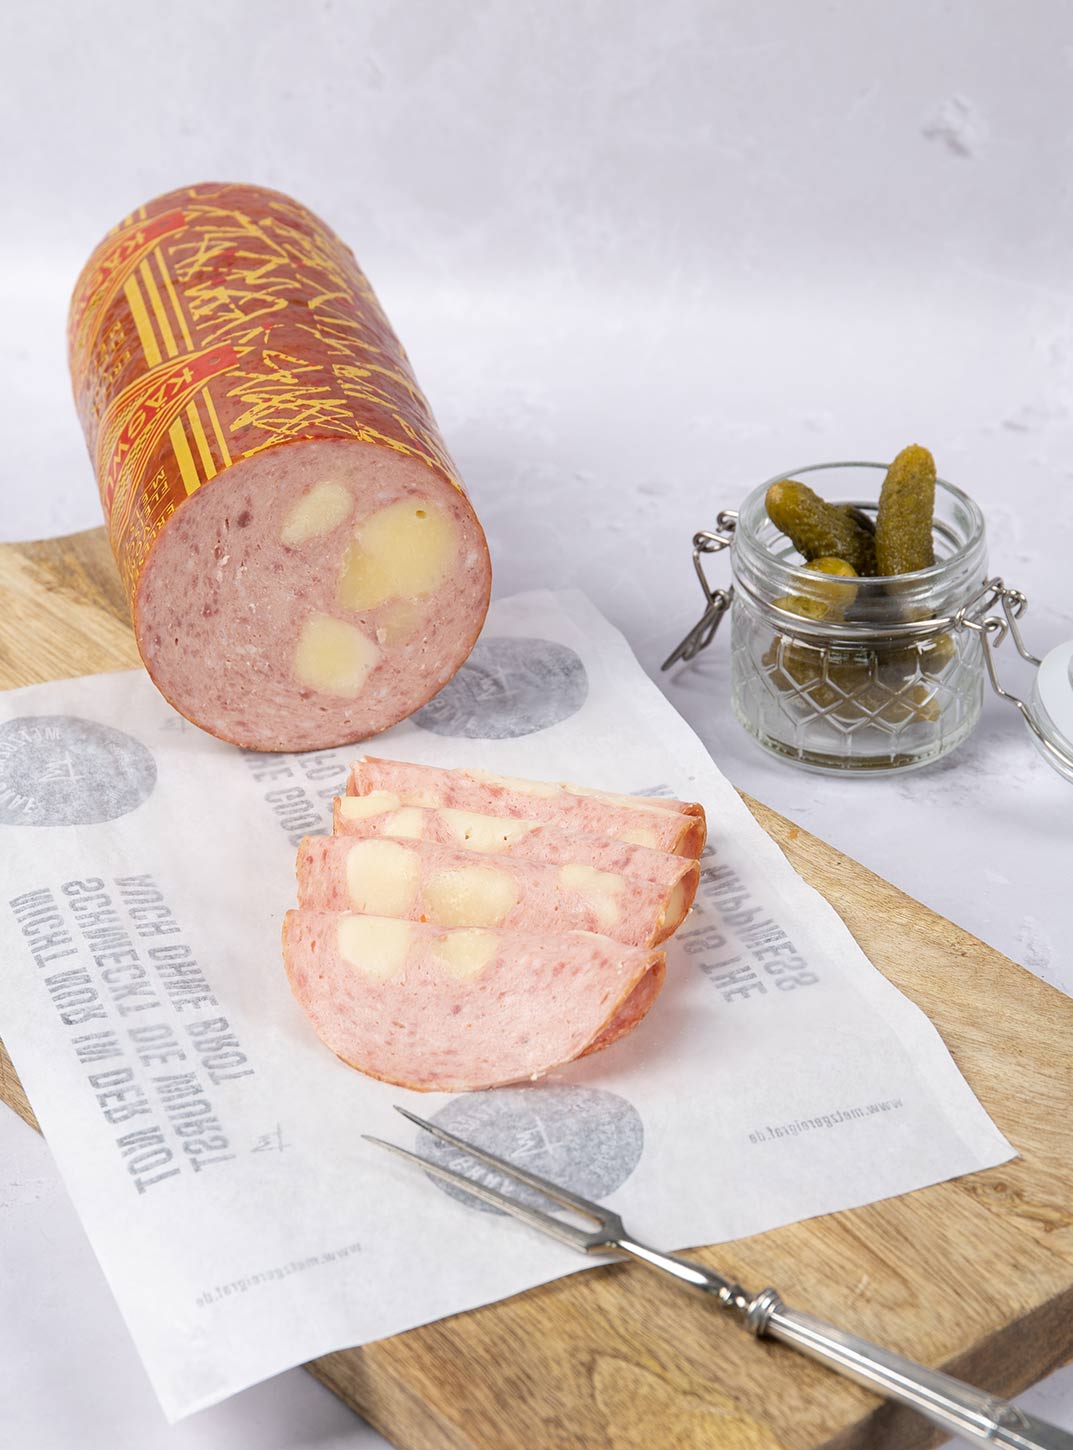 Metzgerei Graf Käsebierwurst | Aufschnitt